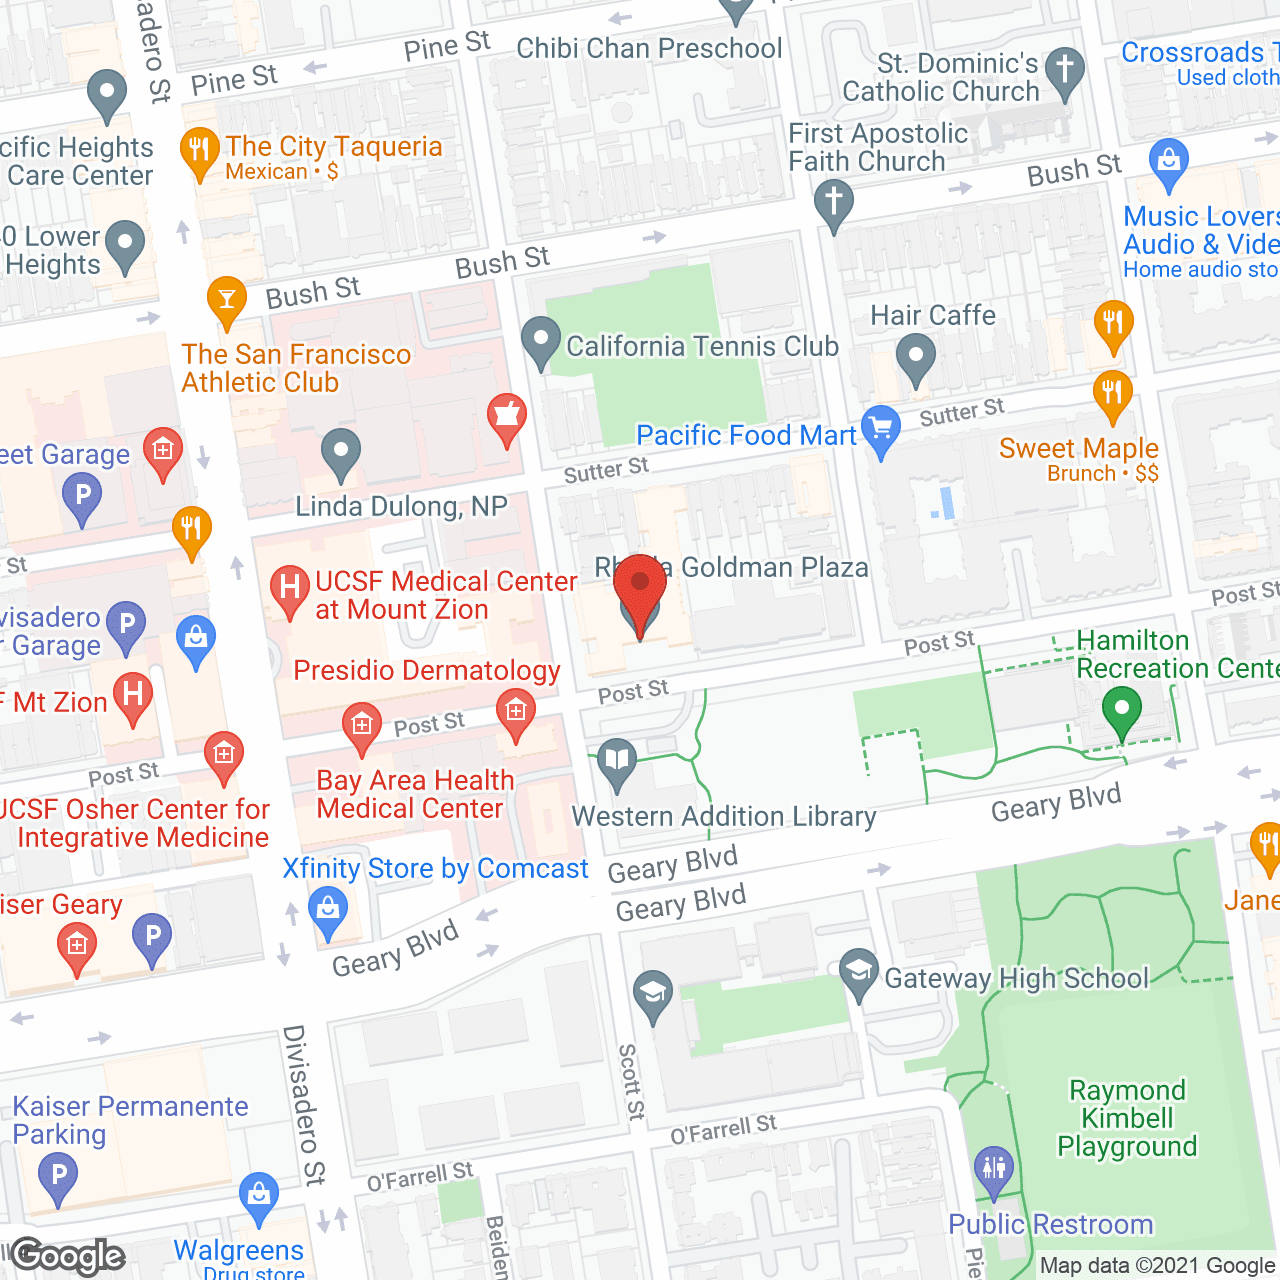 Rhoda Goldman Plaza in google map